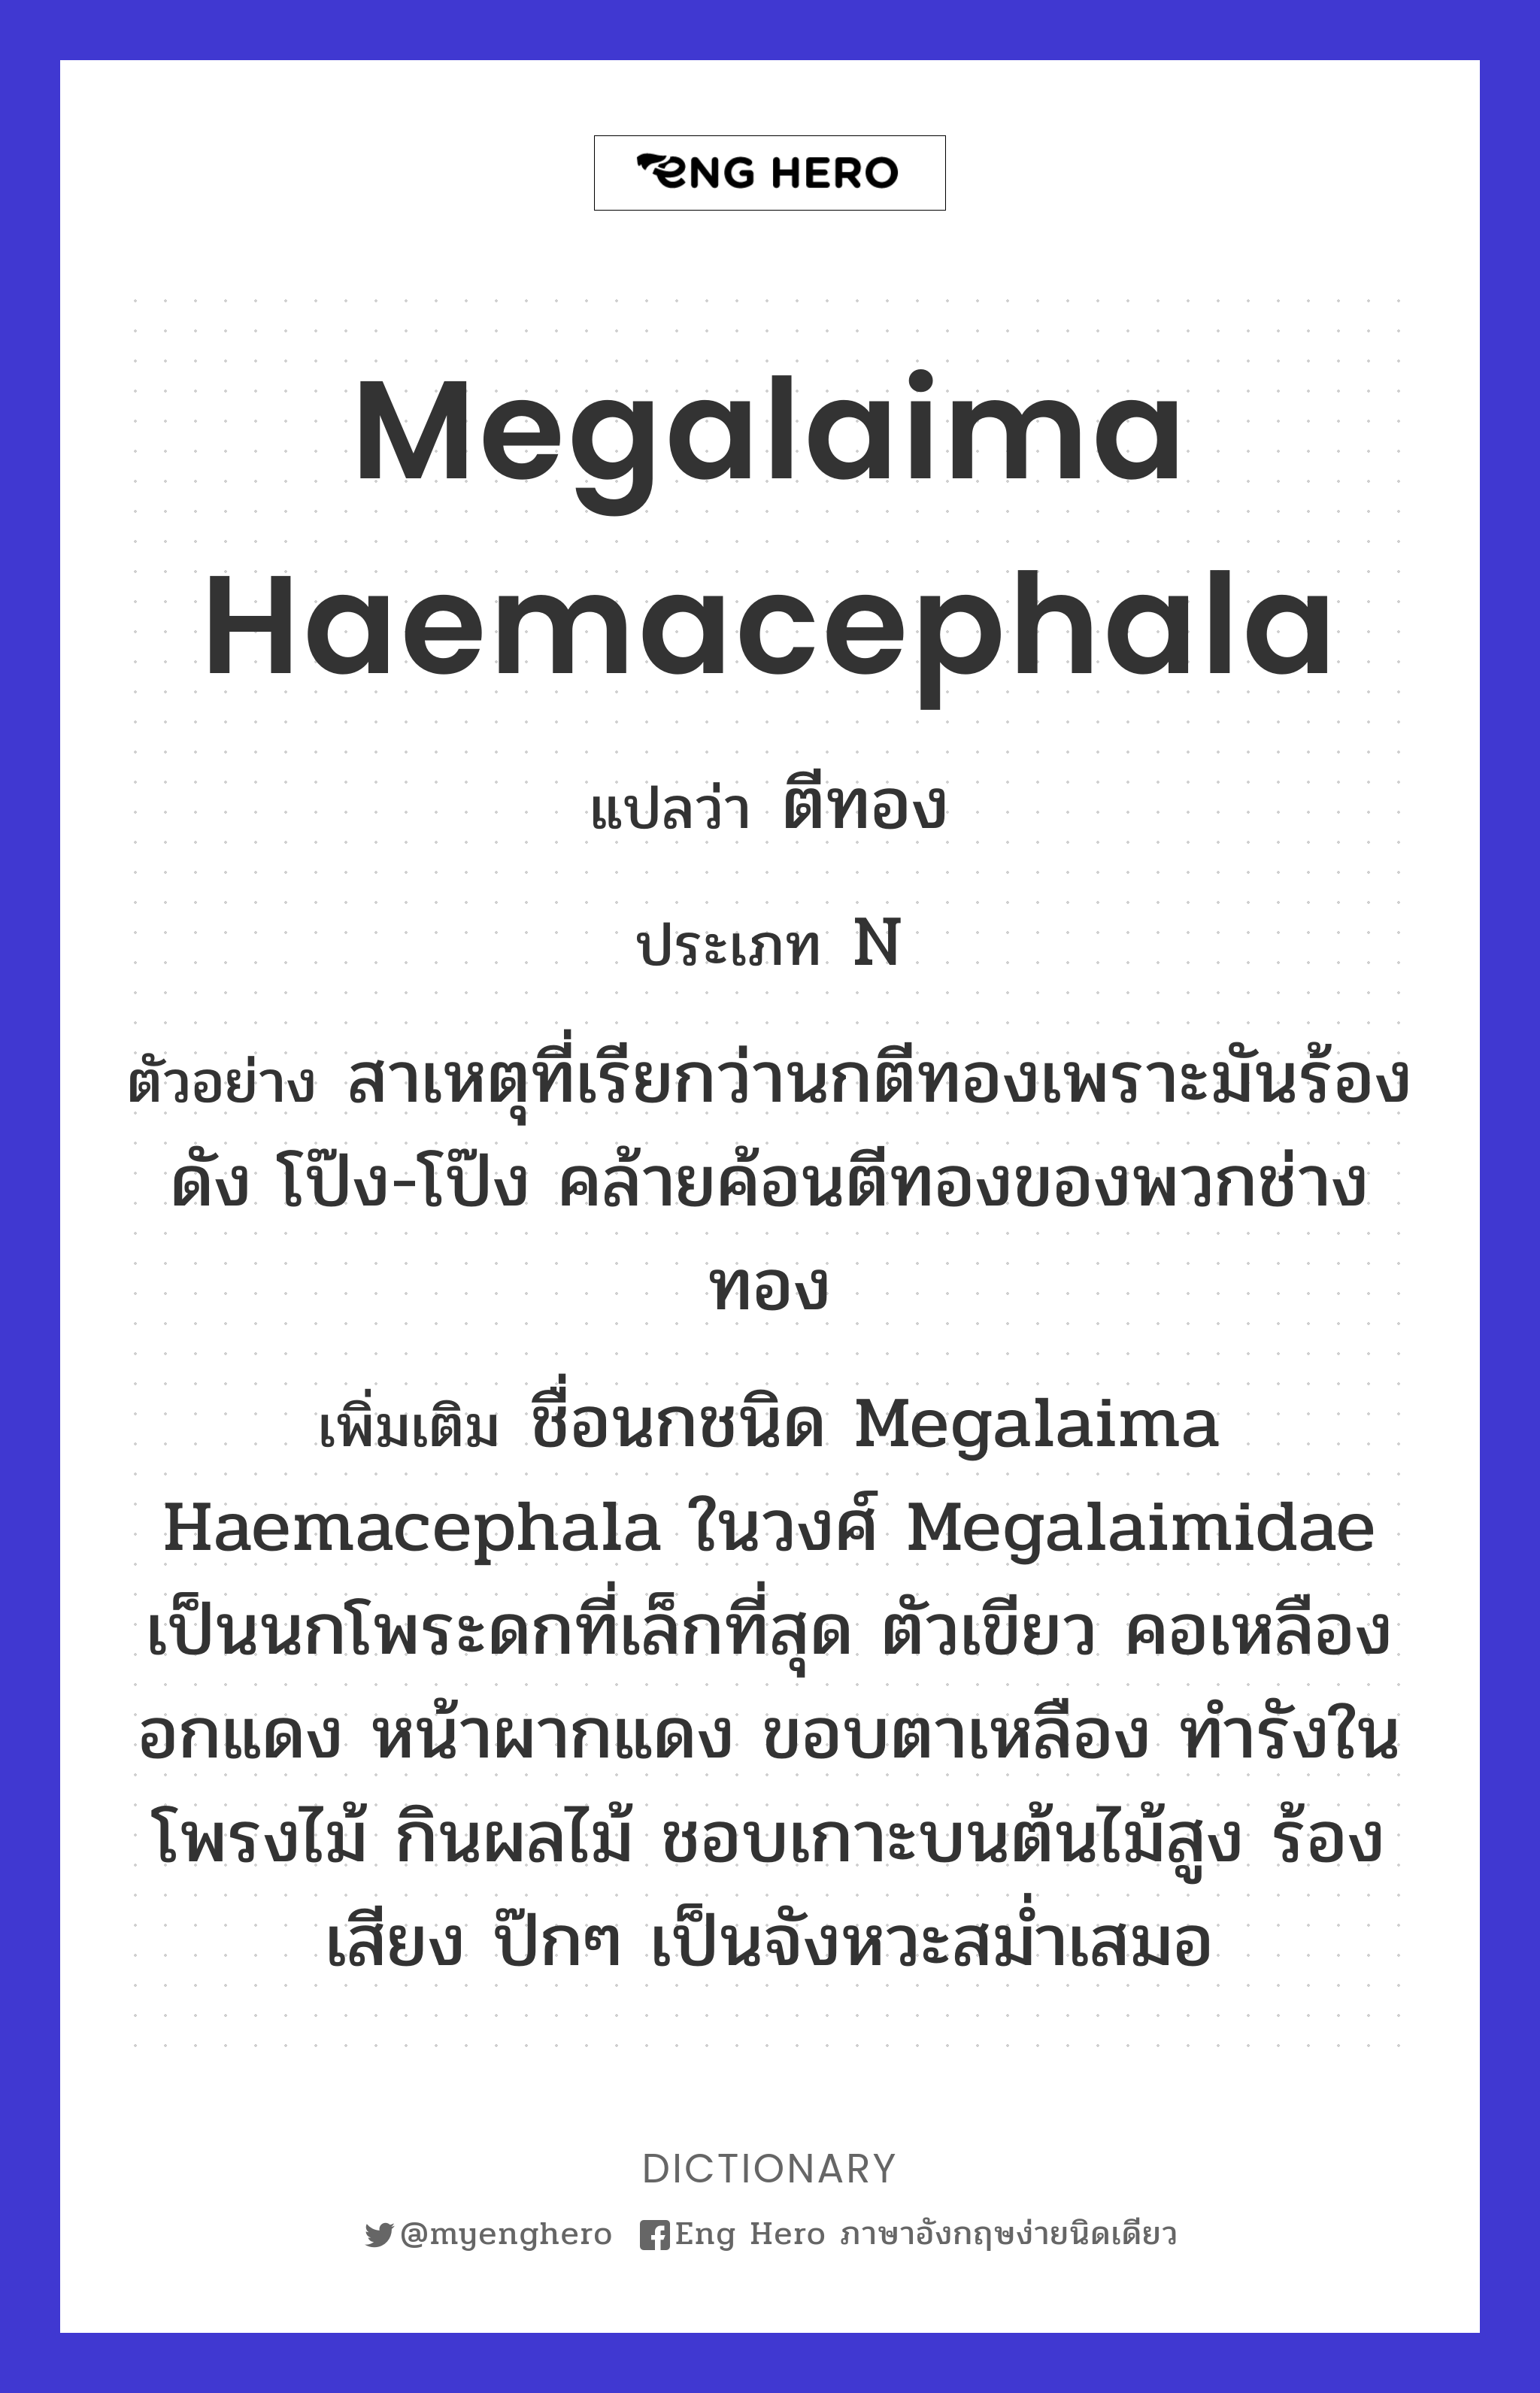 Megalaima haemacephala